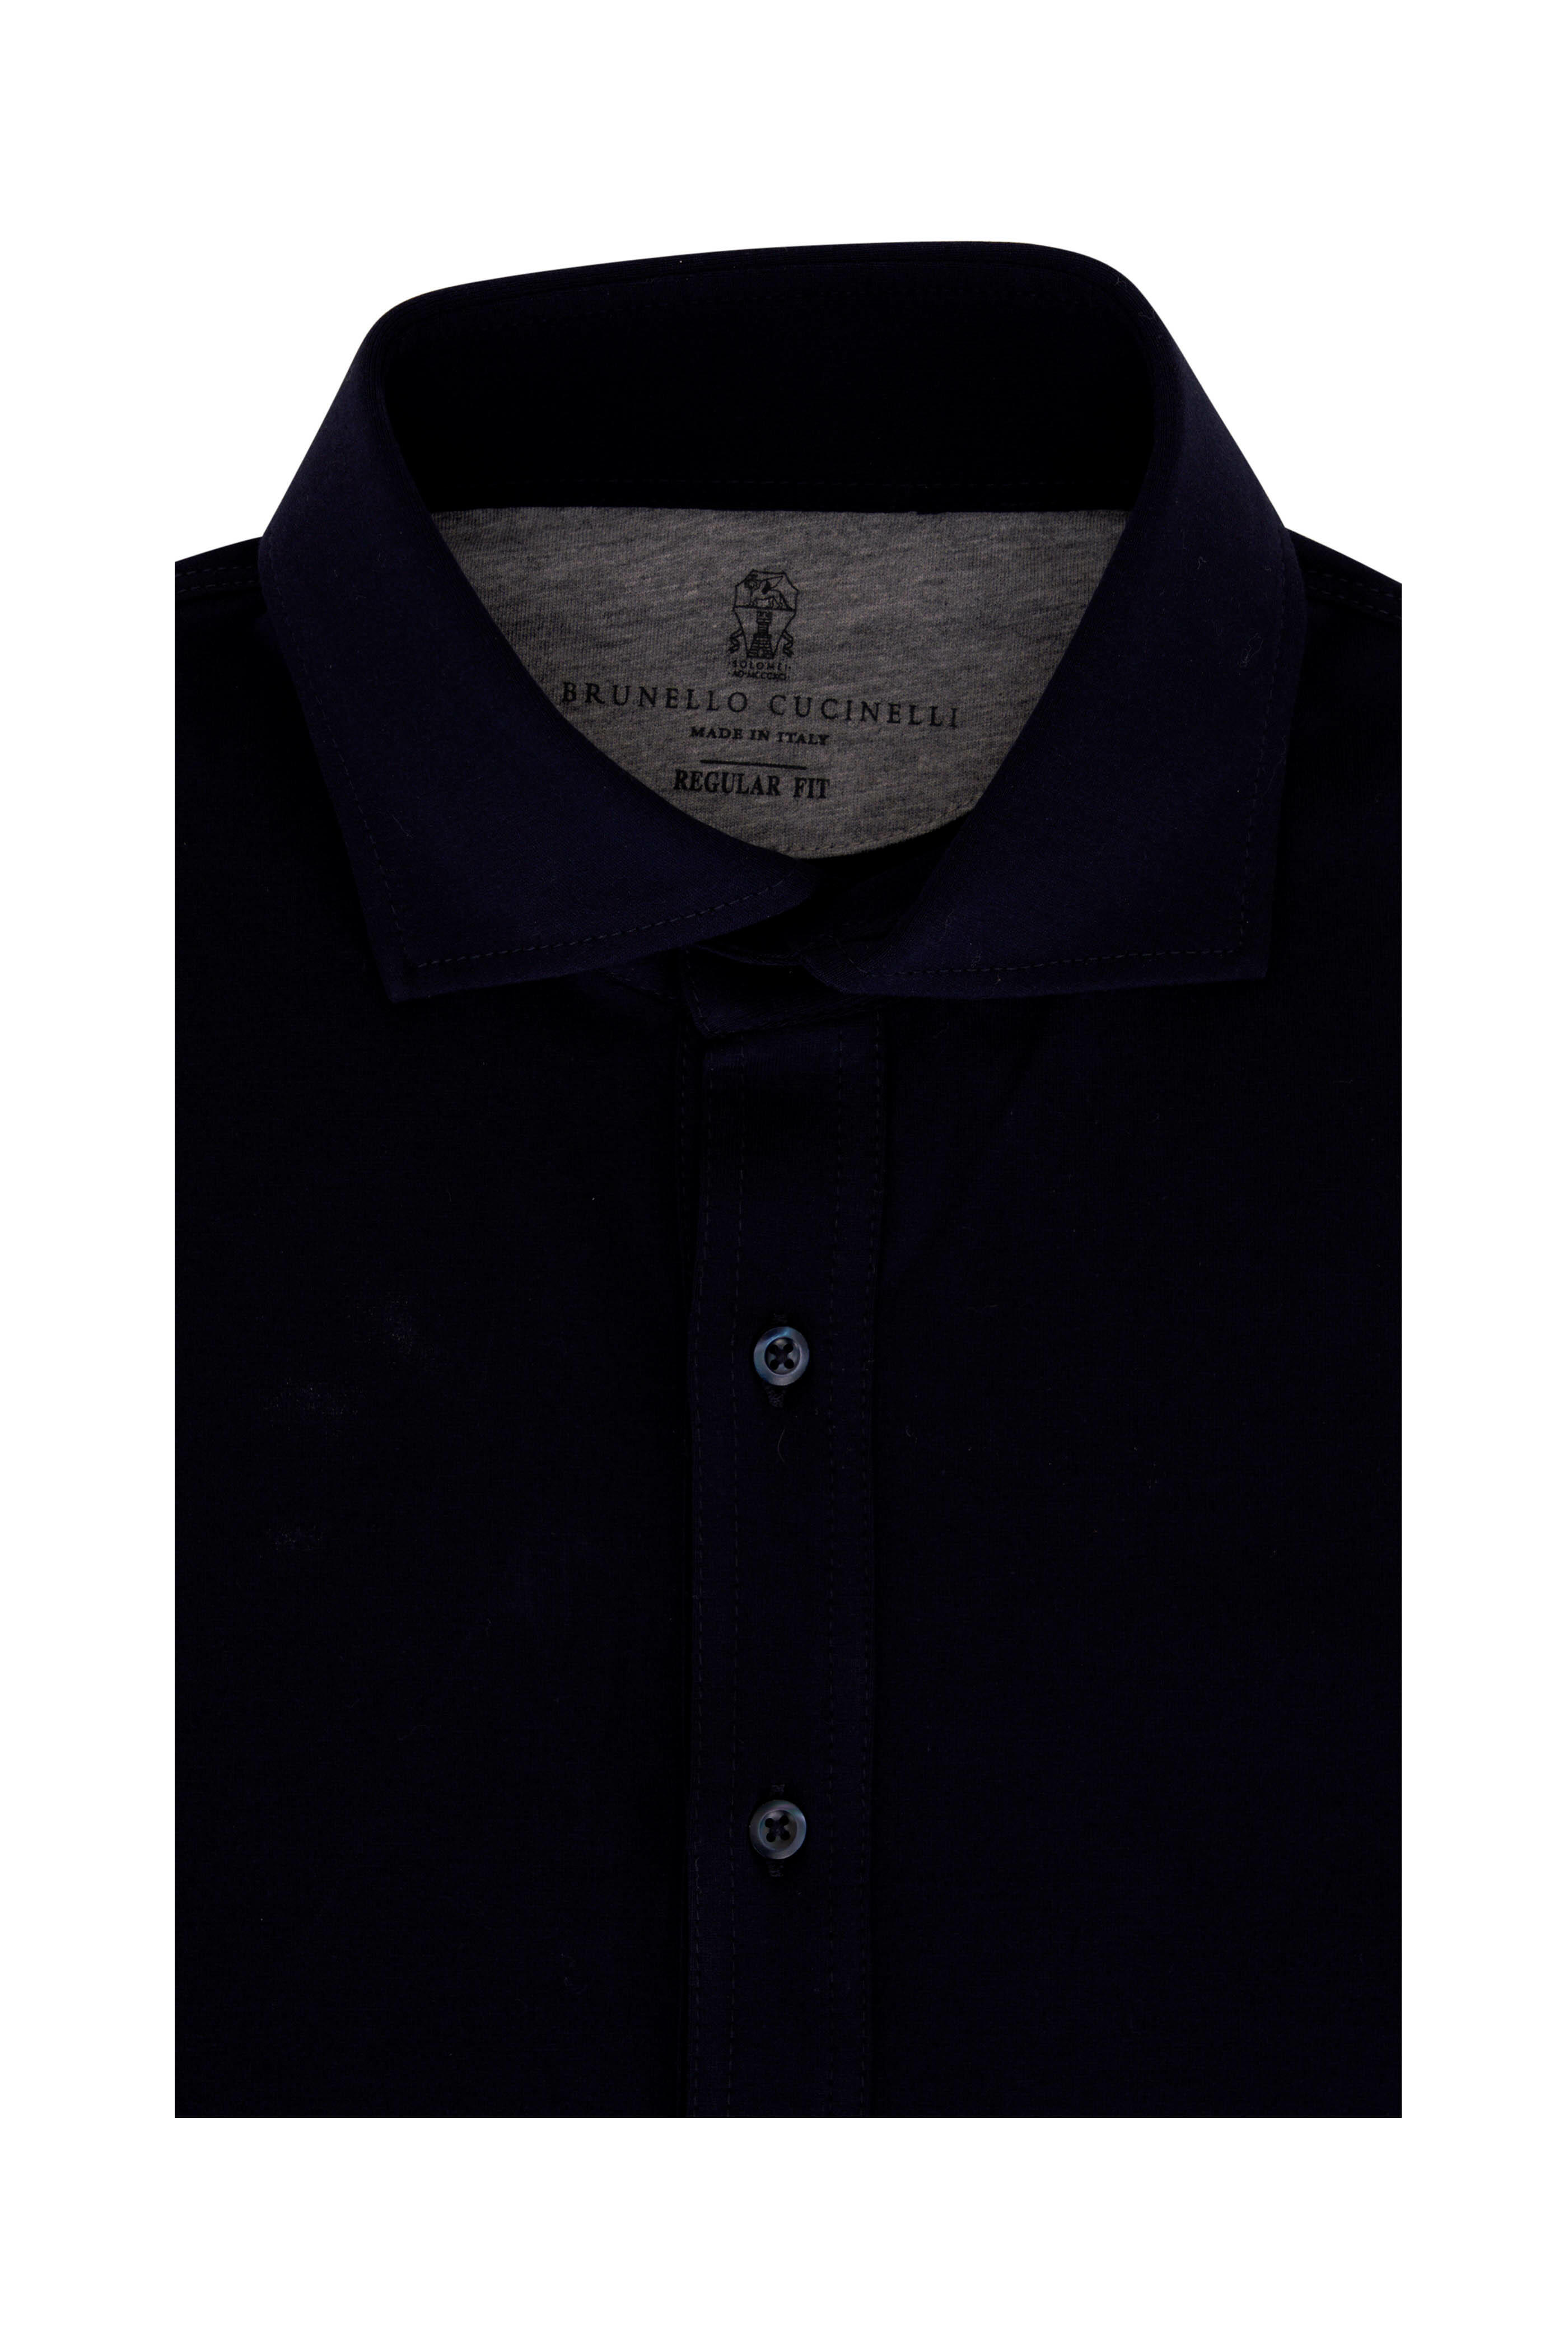 Brunello Cucinelli - Navy Blue Cotton Knit Polo